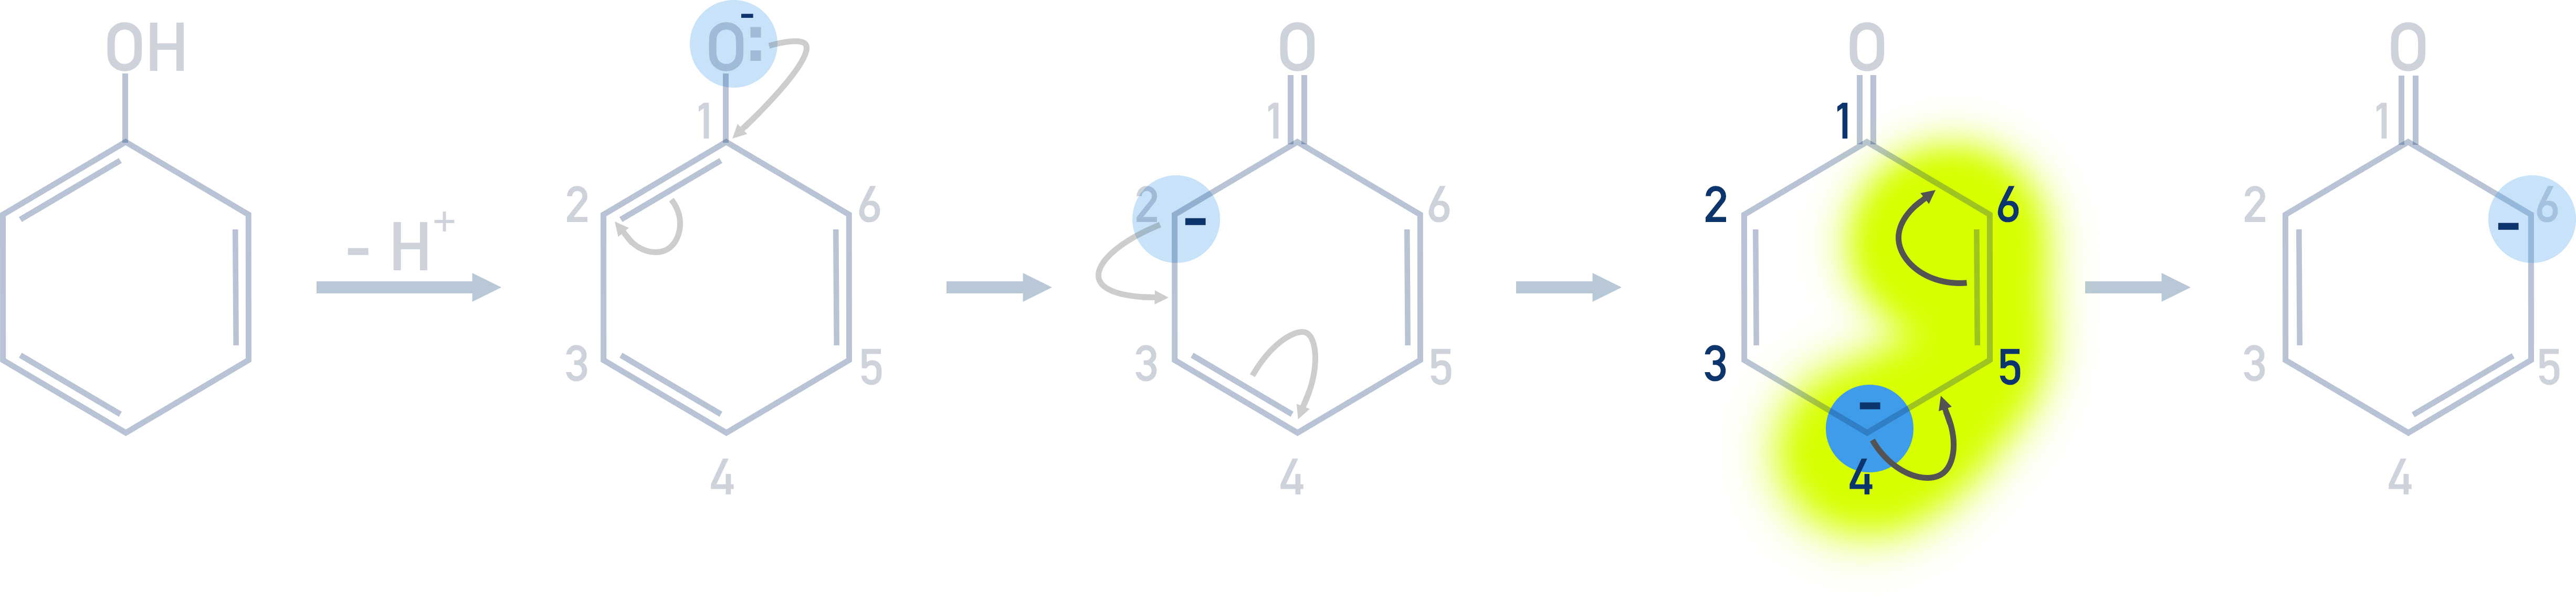 directing effect of phenol resonance 2,4,6-tribromo-phenol